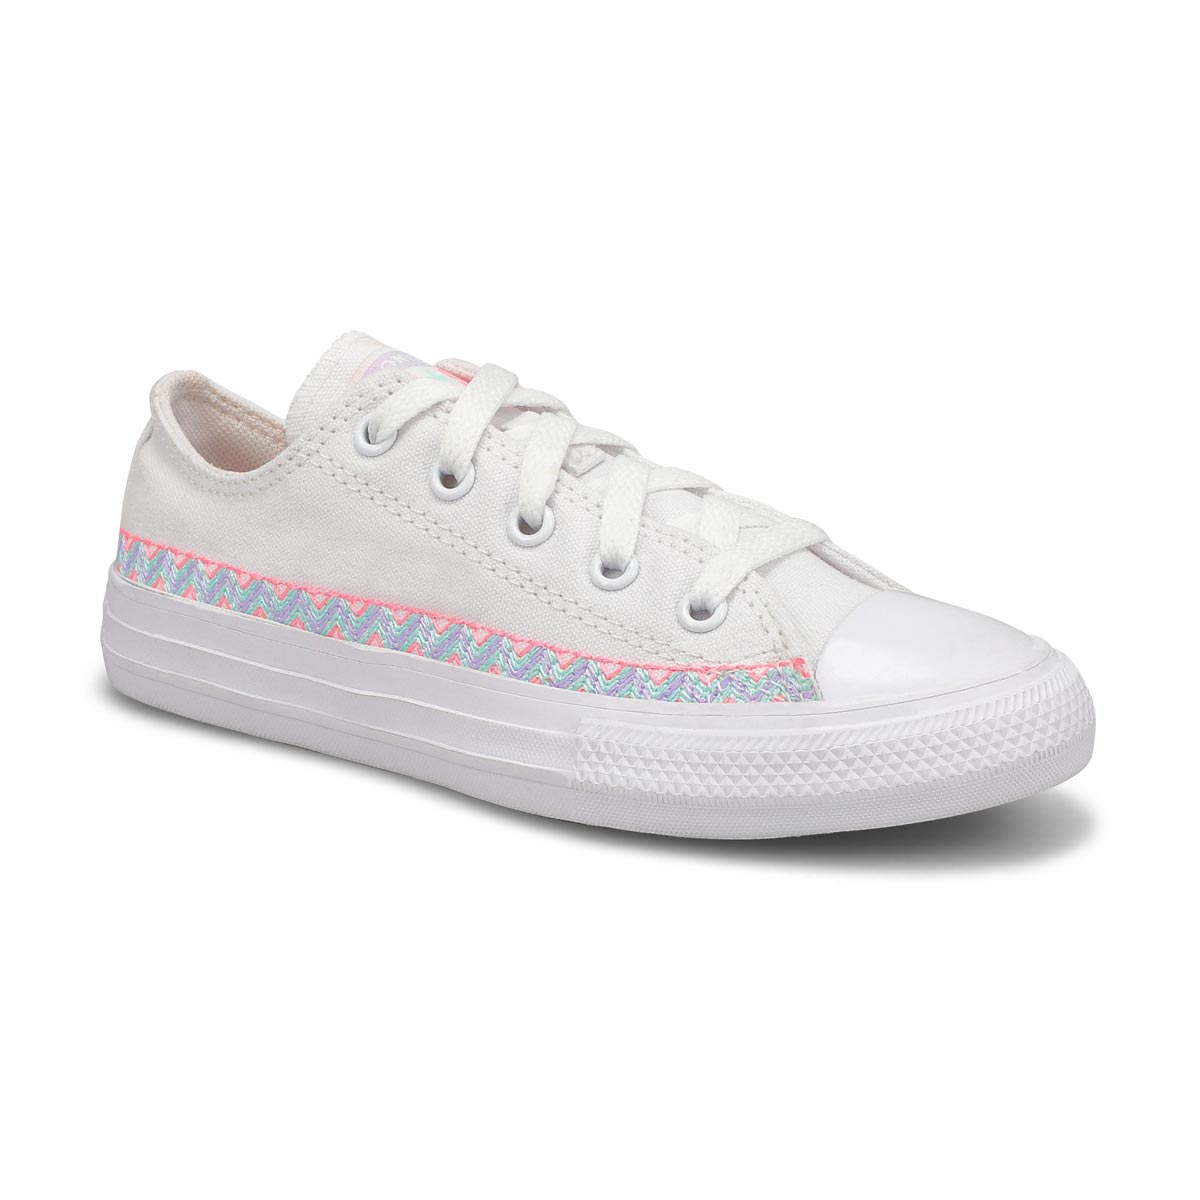 Girls' Chuck Taylor All Star Sneaker - White Multi